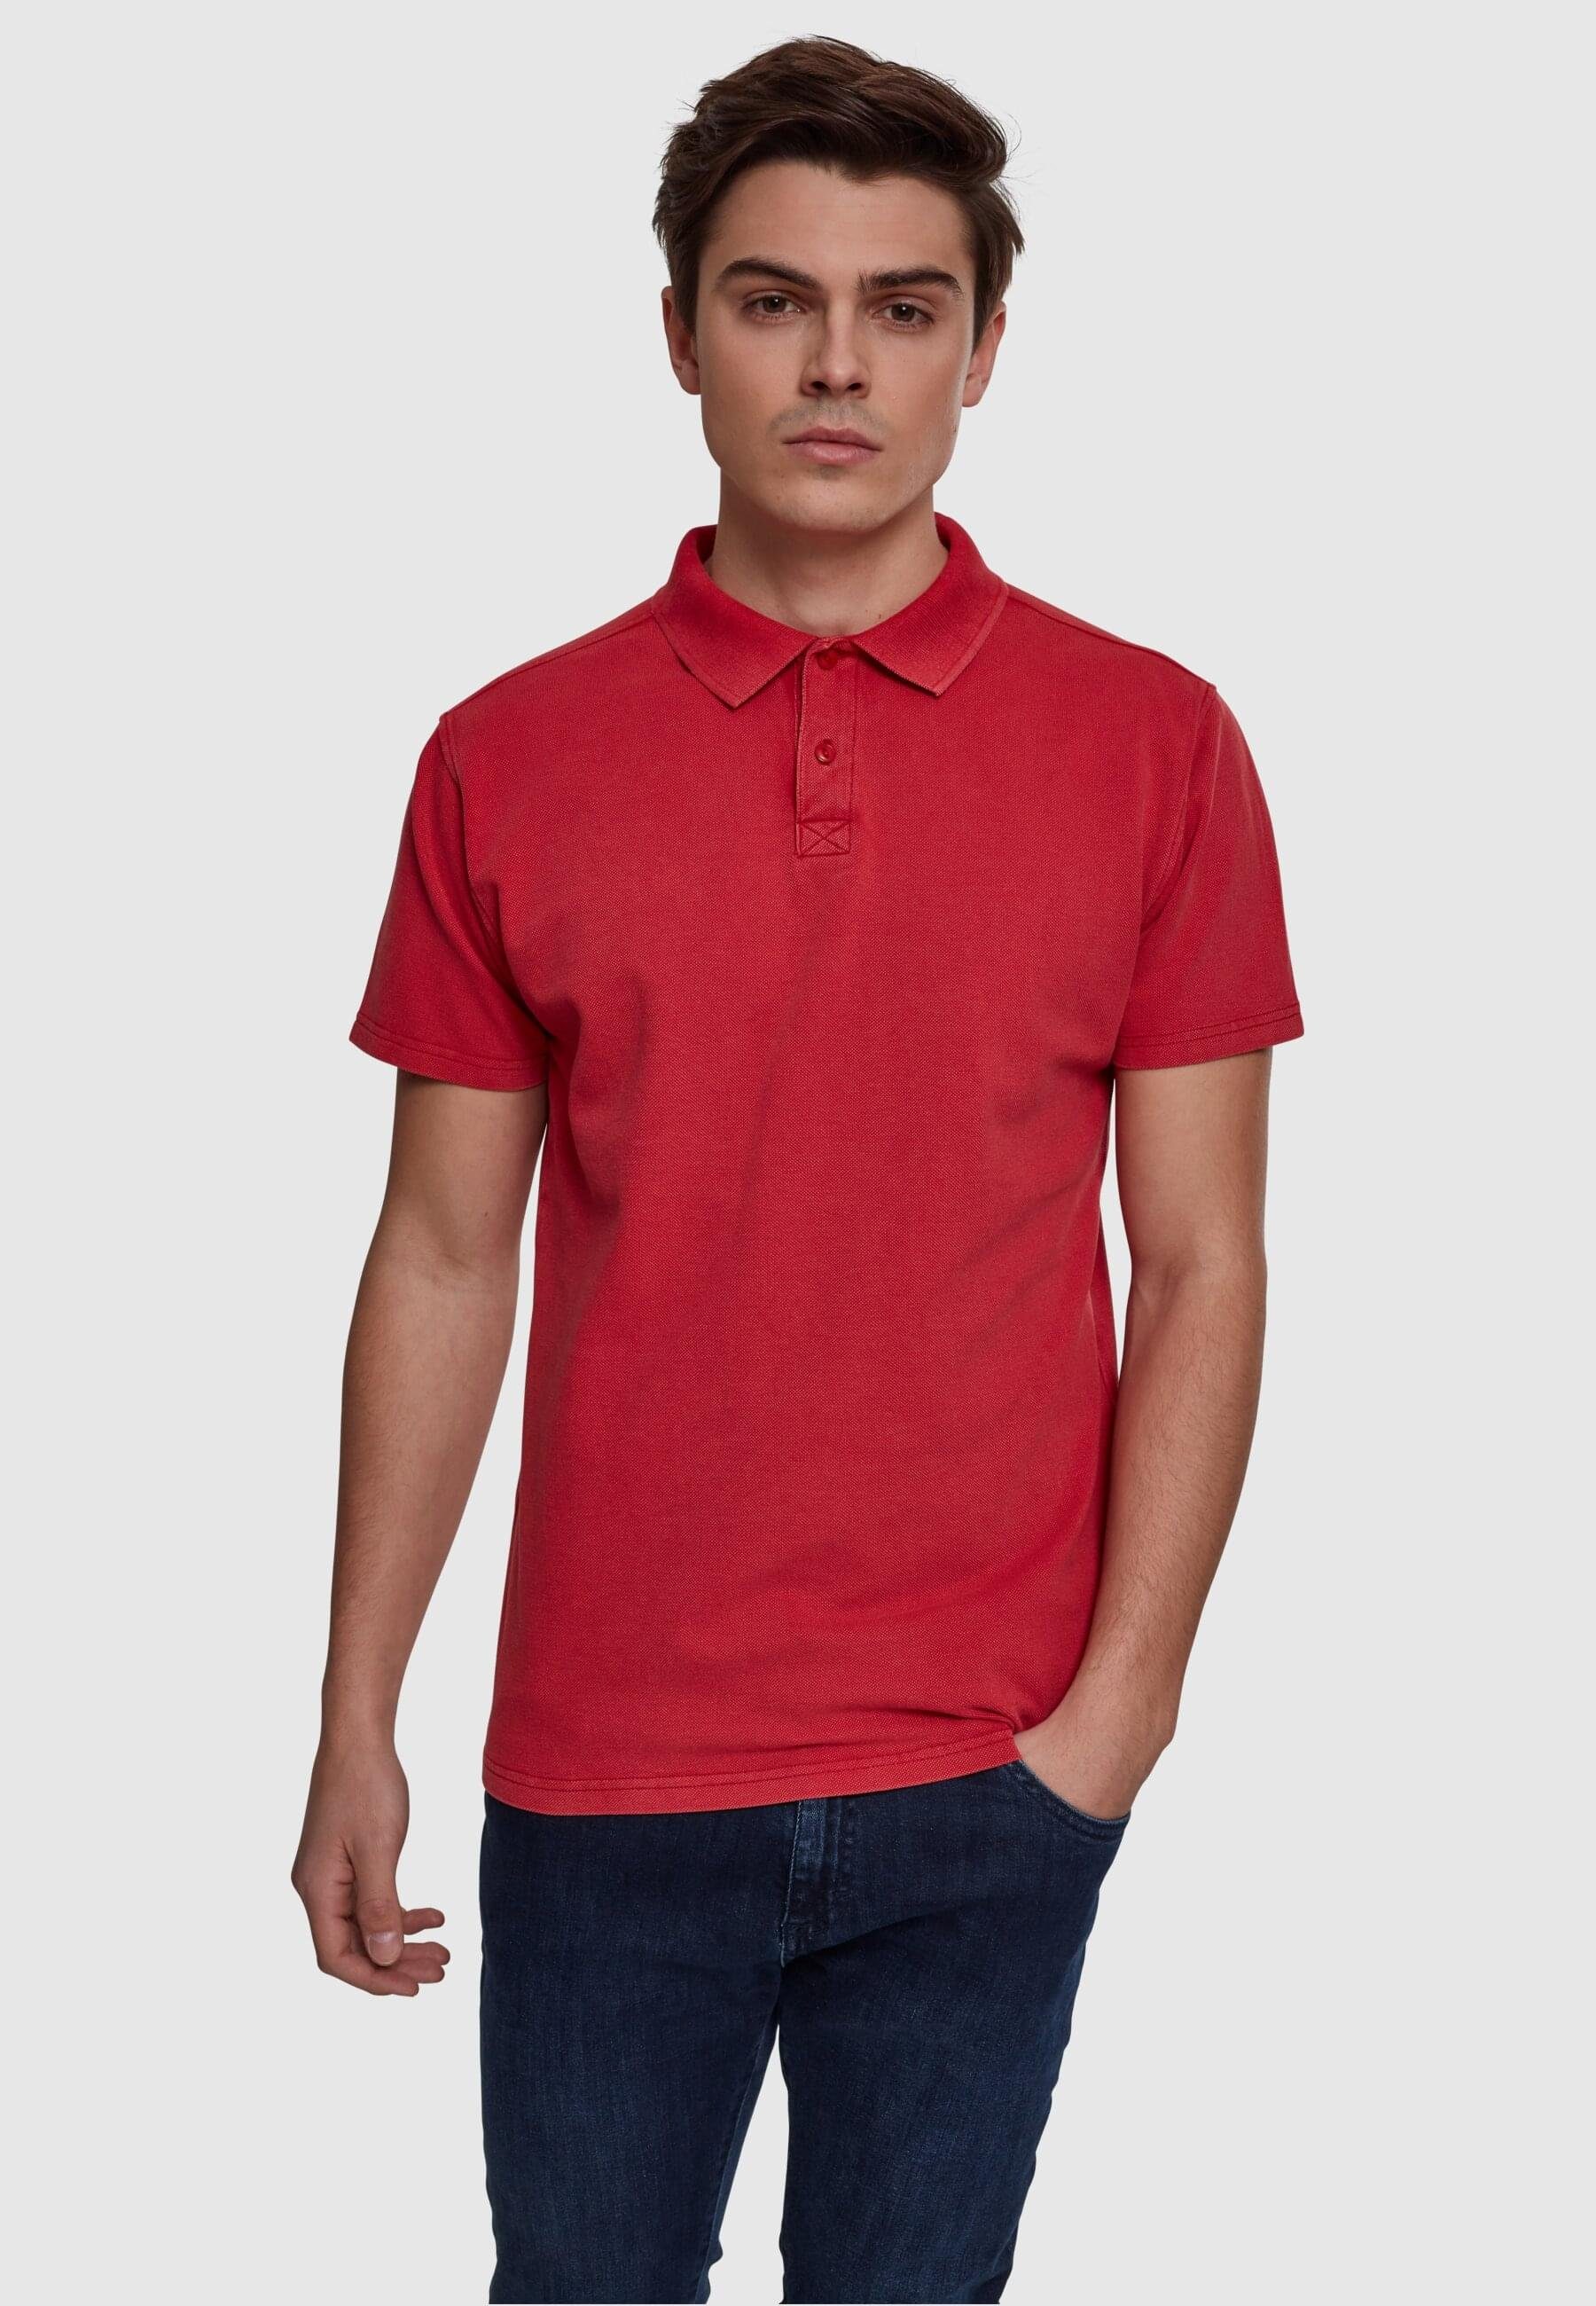 URBAN CLASSICS T-Shirt Herren Garment red Poloshirt (1-tlg) Dye Pique